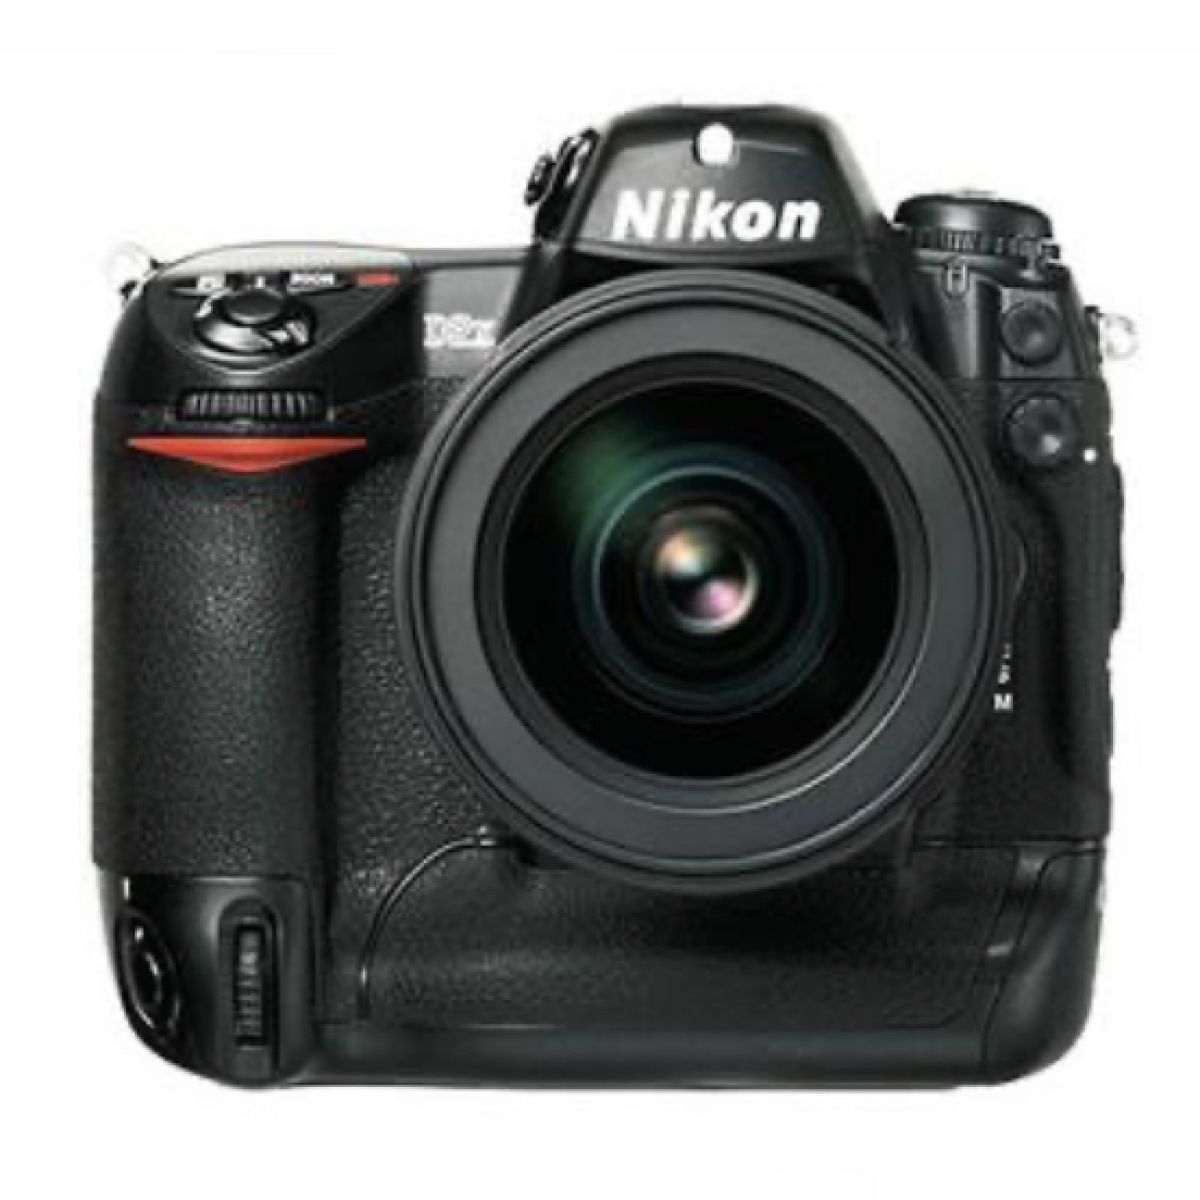 Nikon D2x 12 Mpx  Compact flash